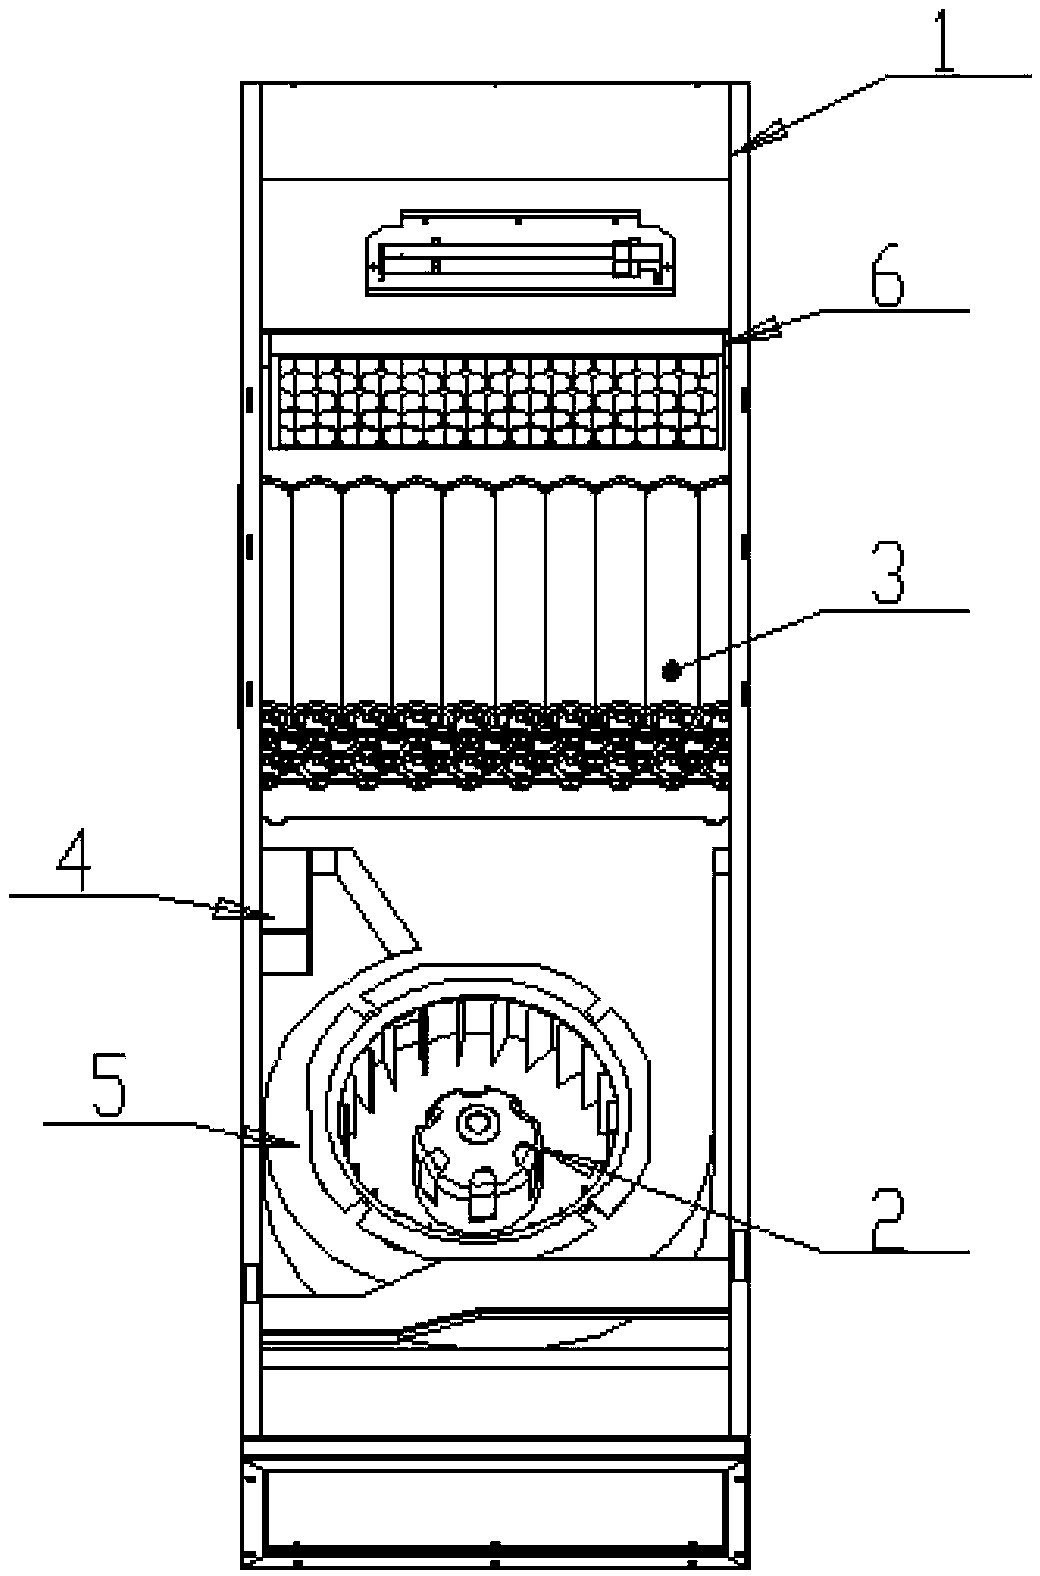 A plasma air sterilizer